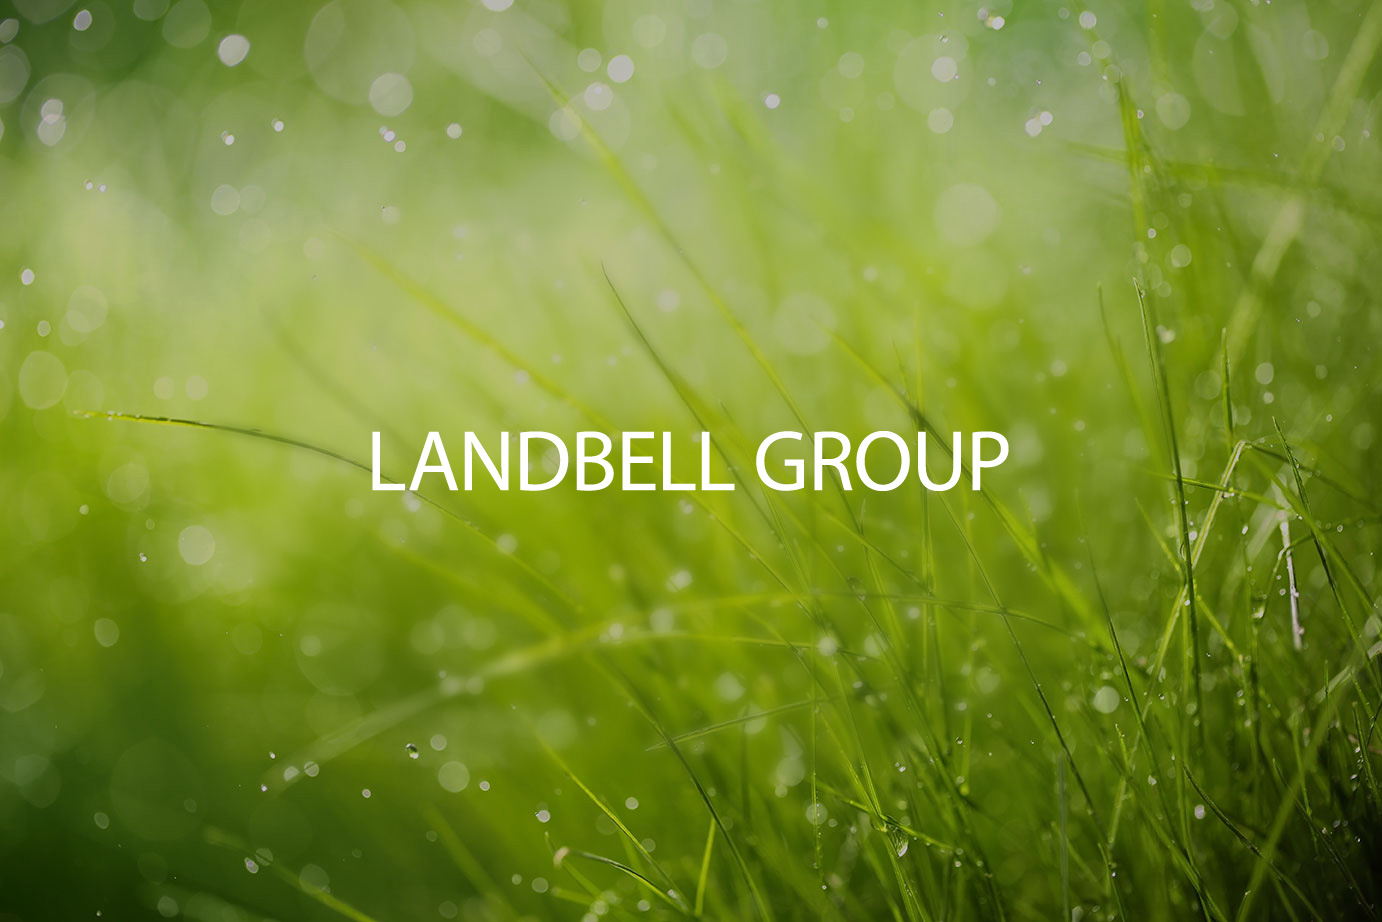 img-landbell-group-grass-dark-logo